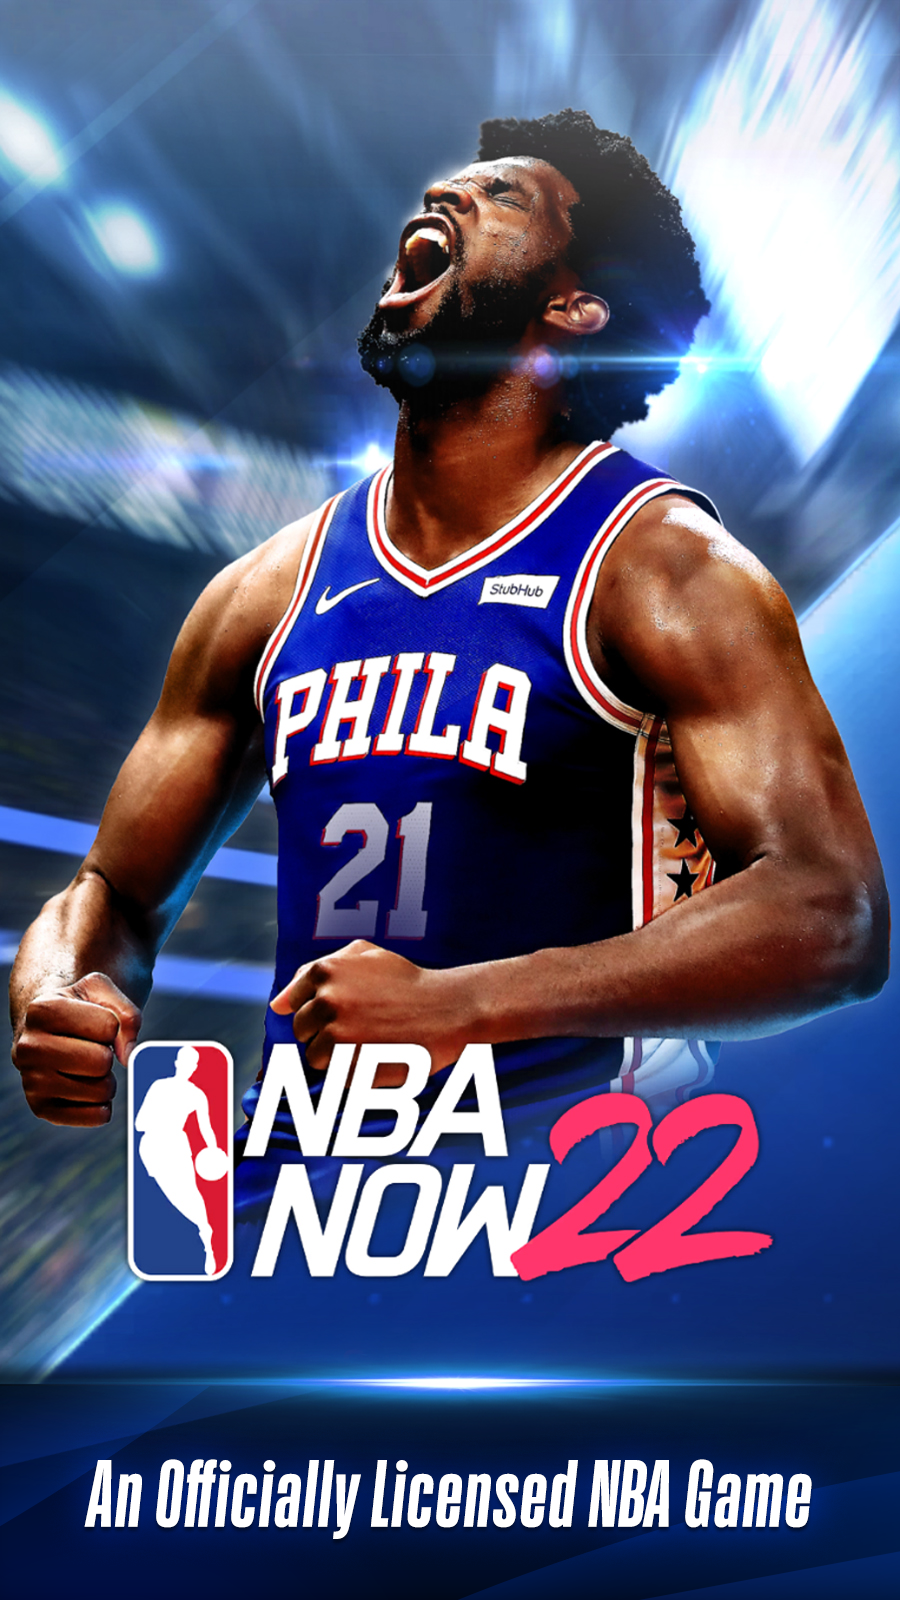 Screenshot 1 of NBA BÂY GIỜ 22 2.0.0